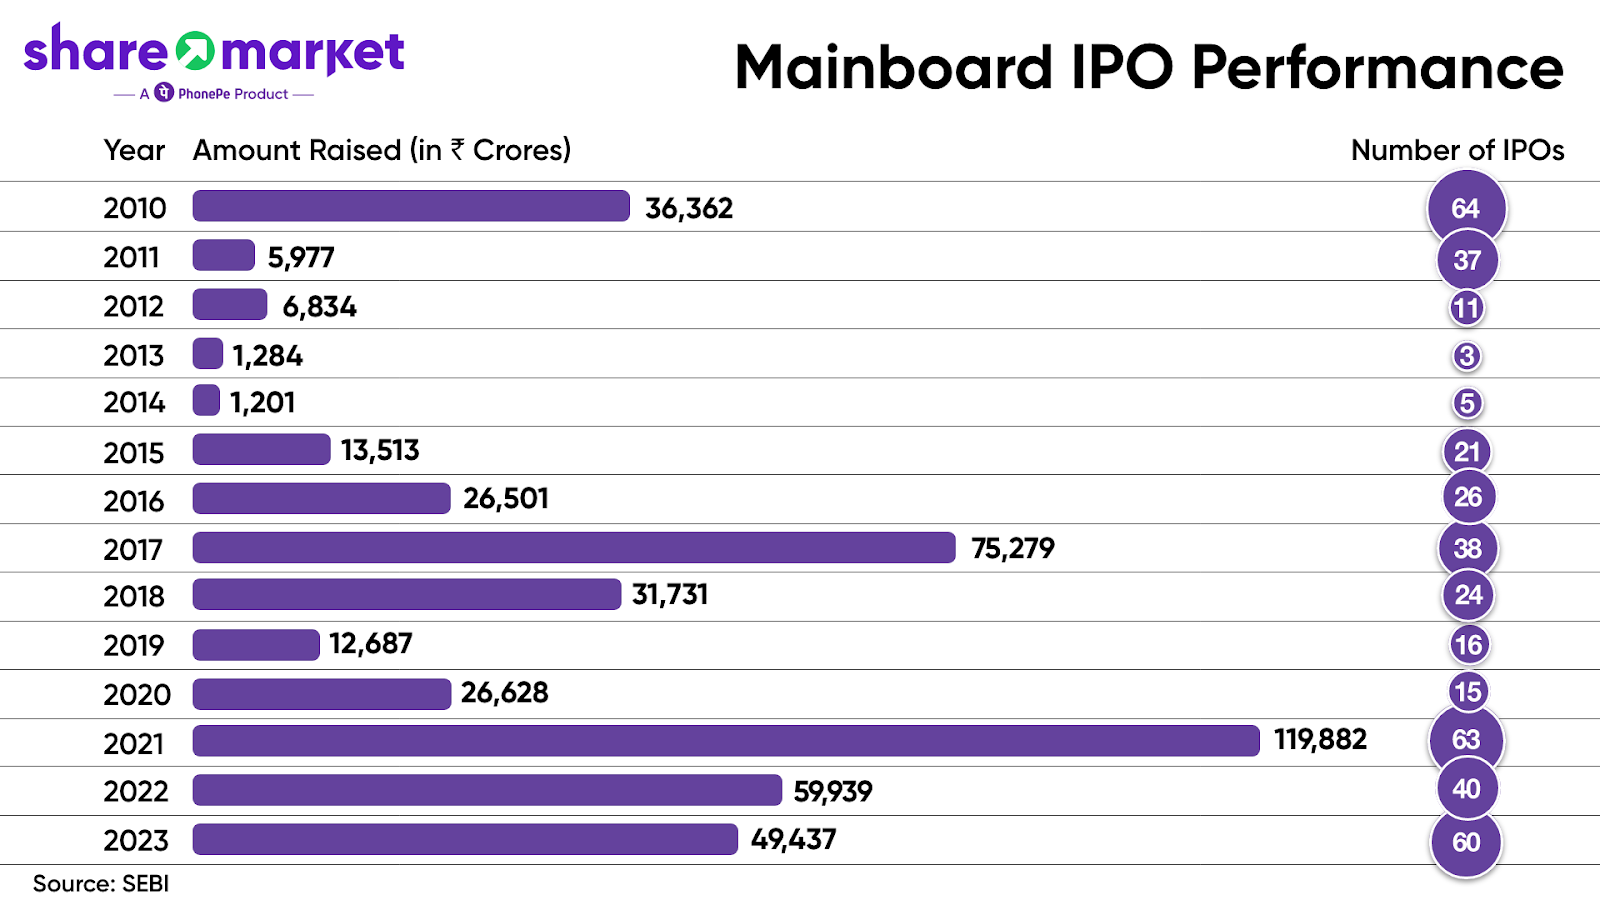 Mainboard IPO Performance